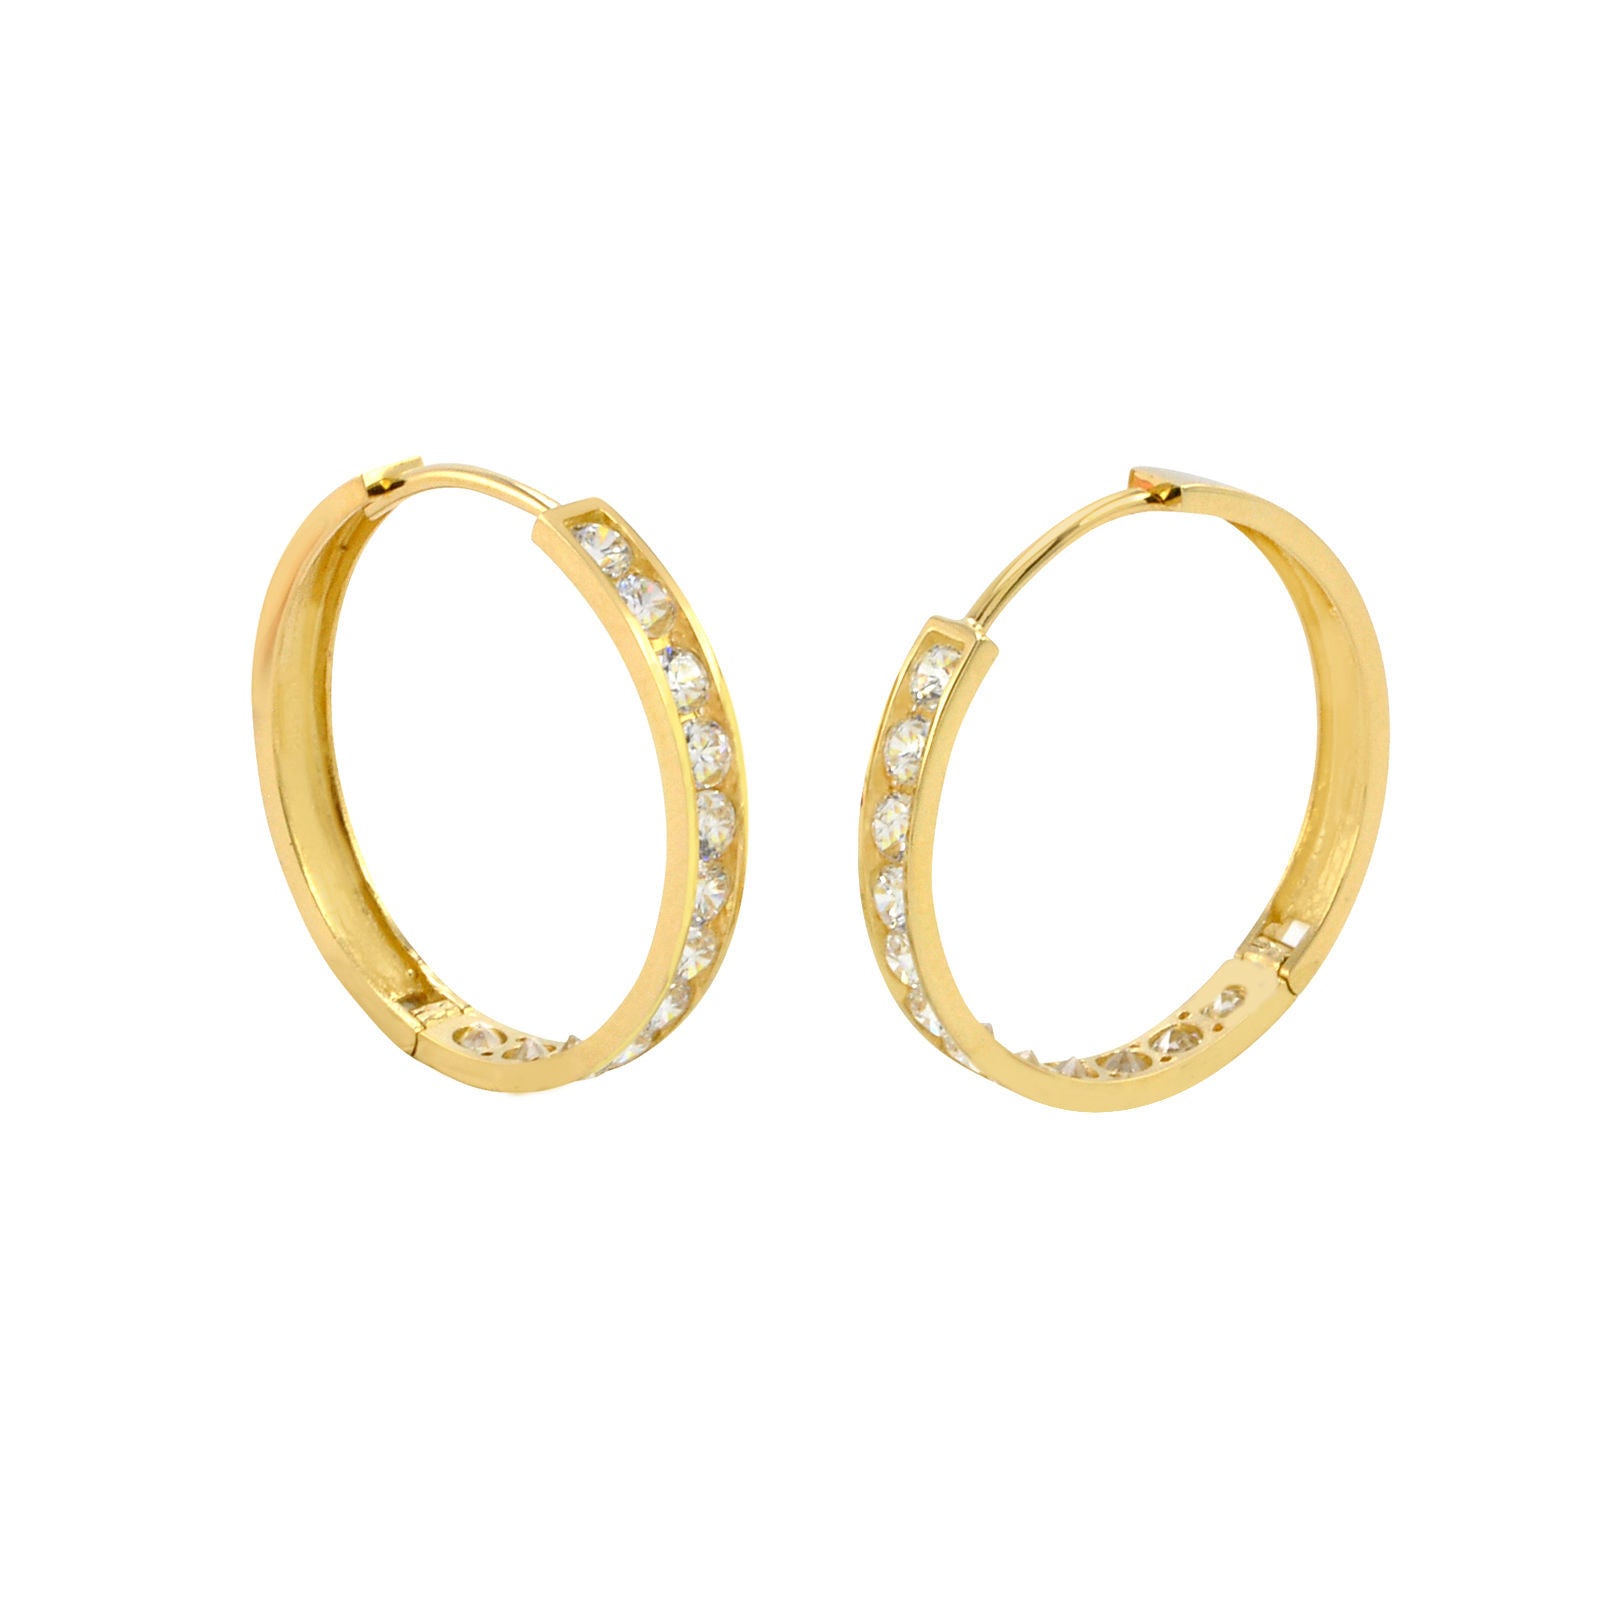 10k Yellow Gold CZ Huggie Hoop Earrings 23mm x 3mm | Jewelryland.com